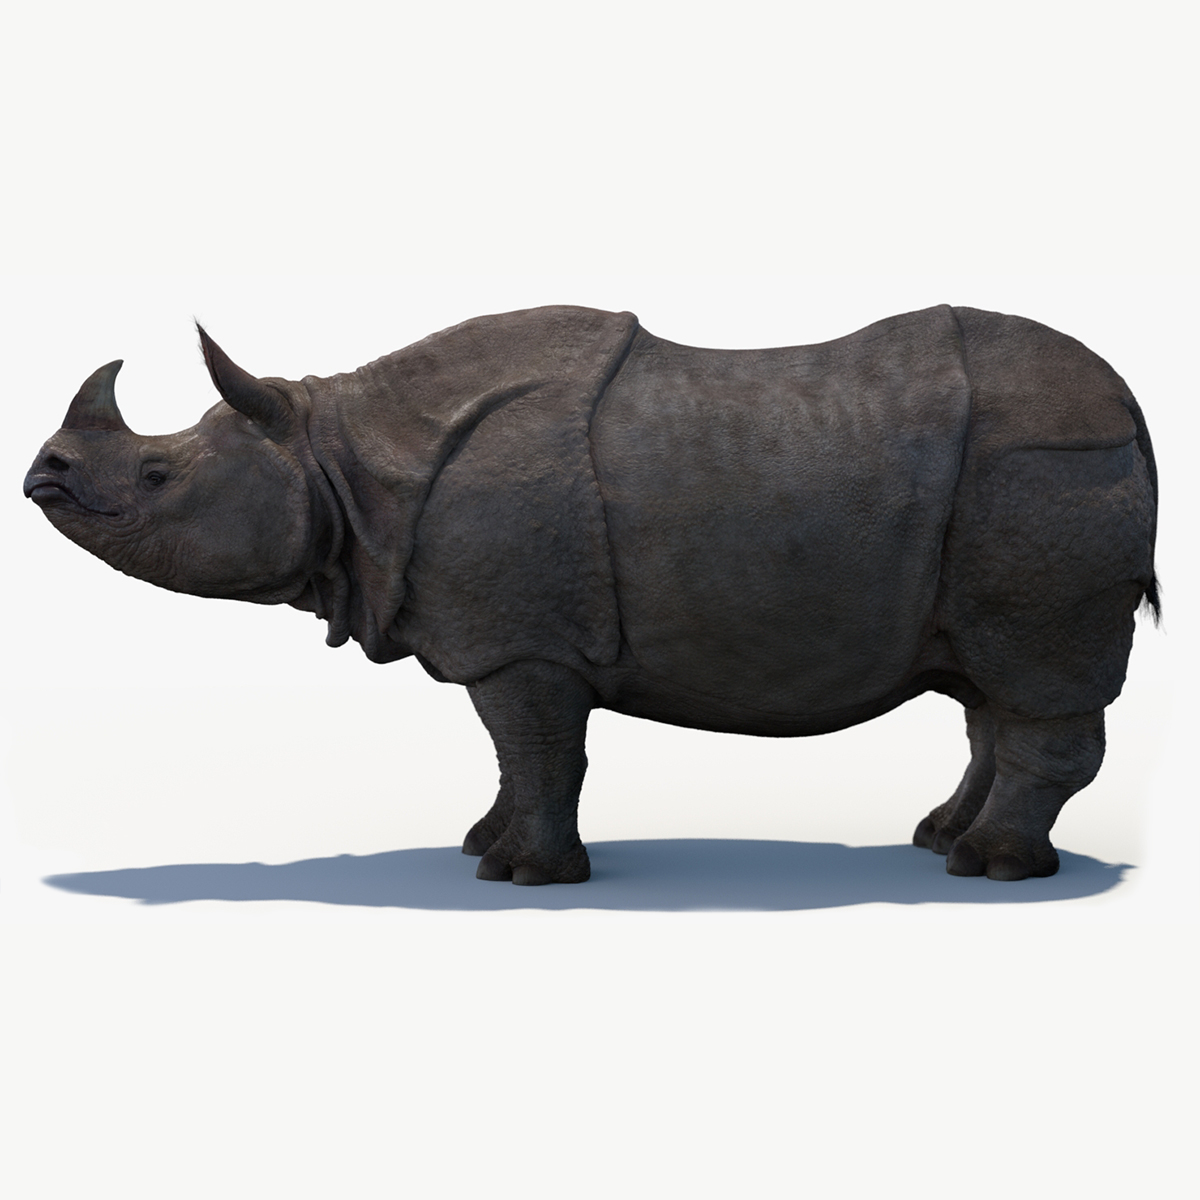 Rhinoceros 3D 7.30.23163.13001 for mac download